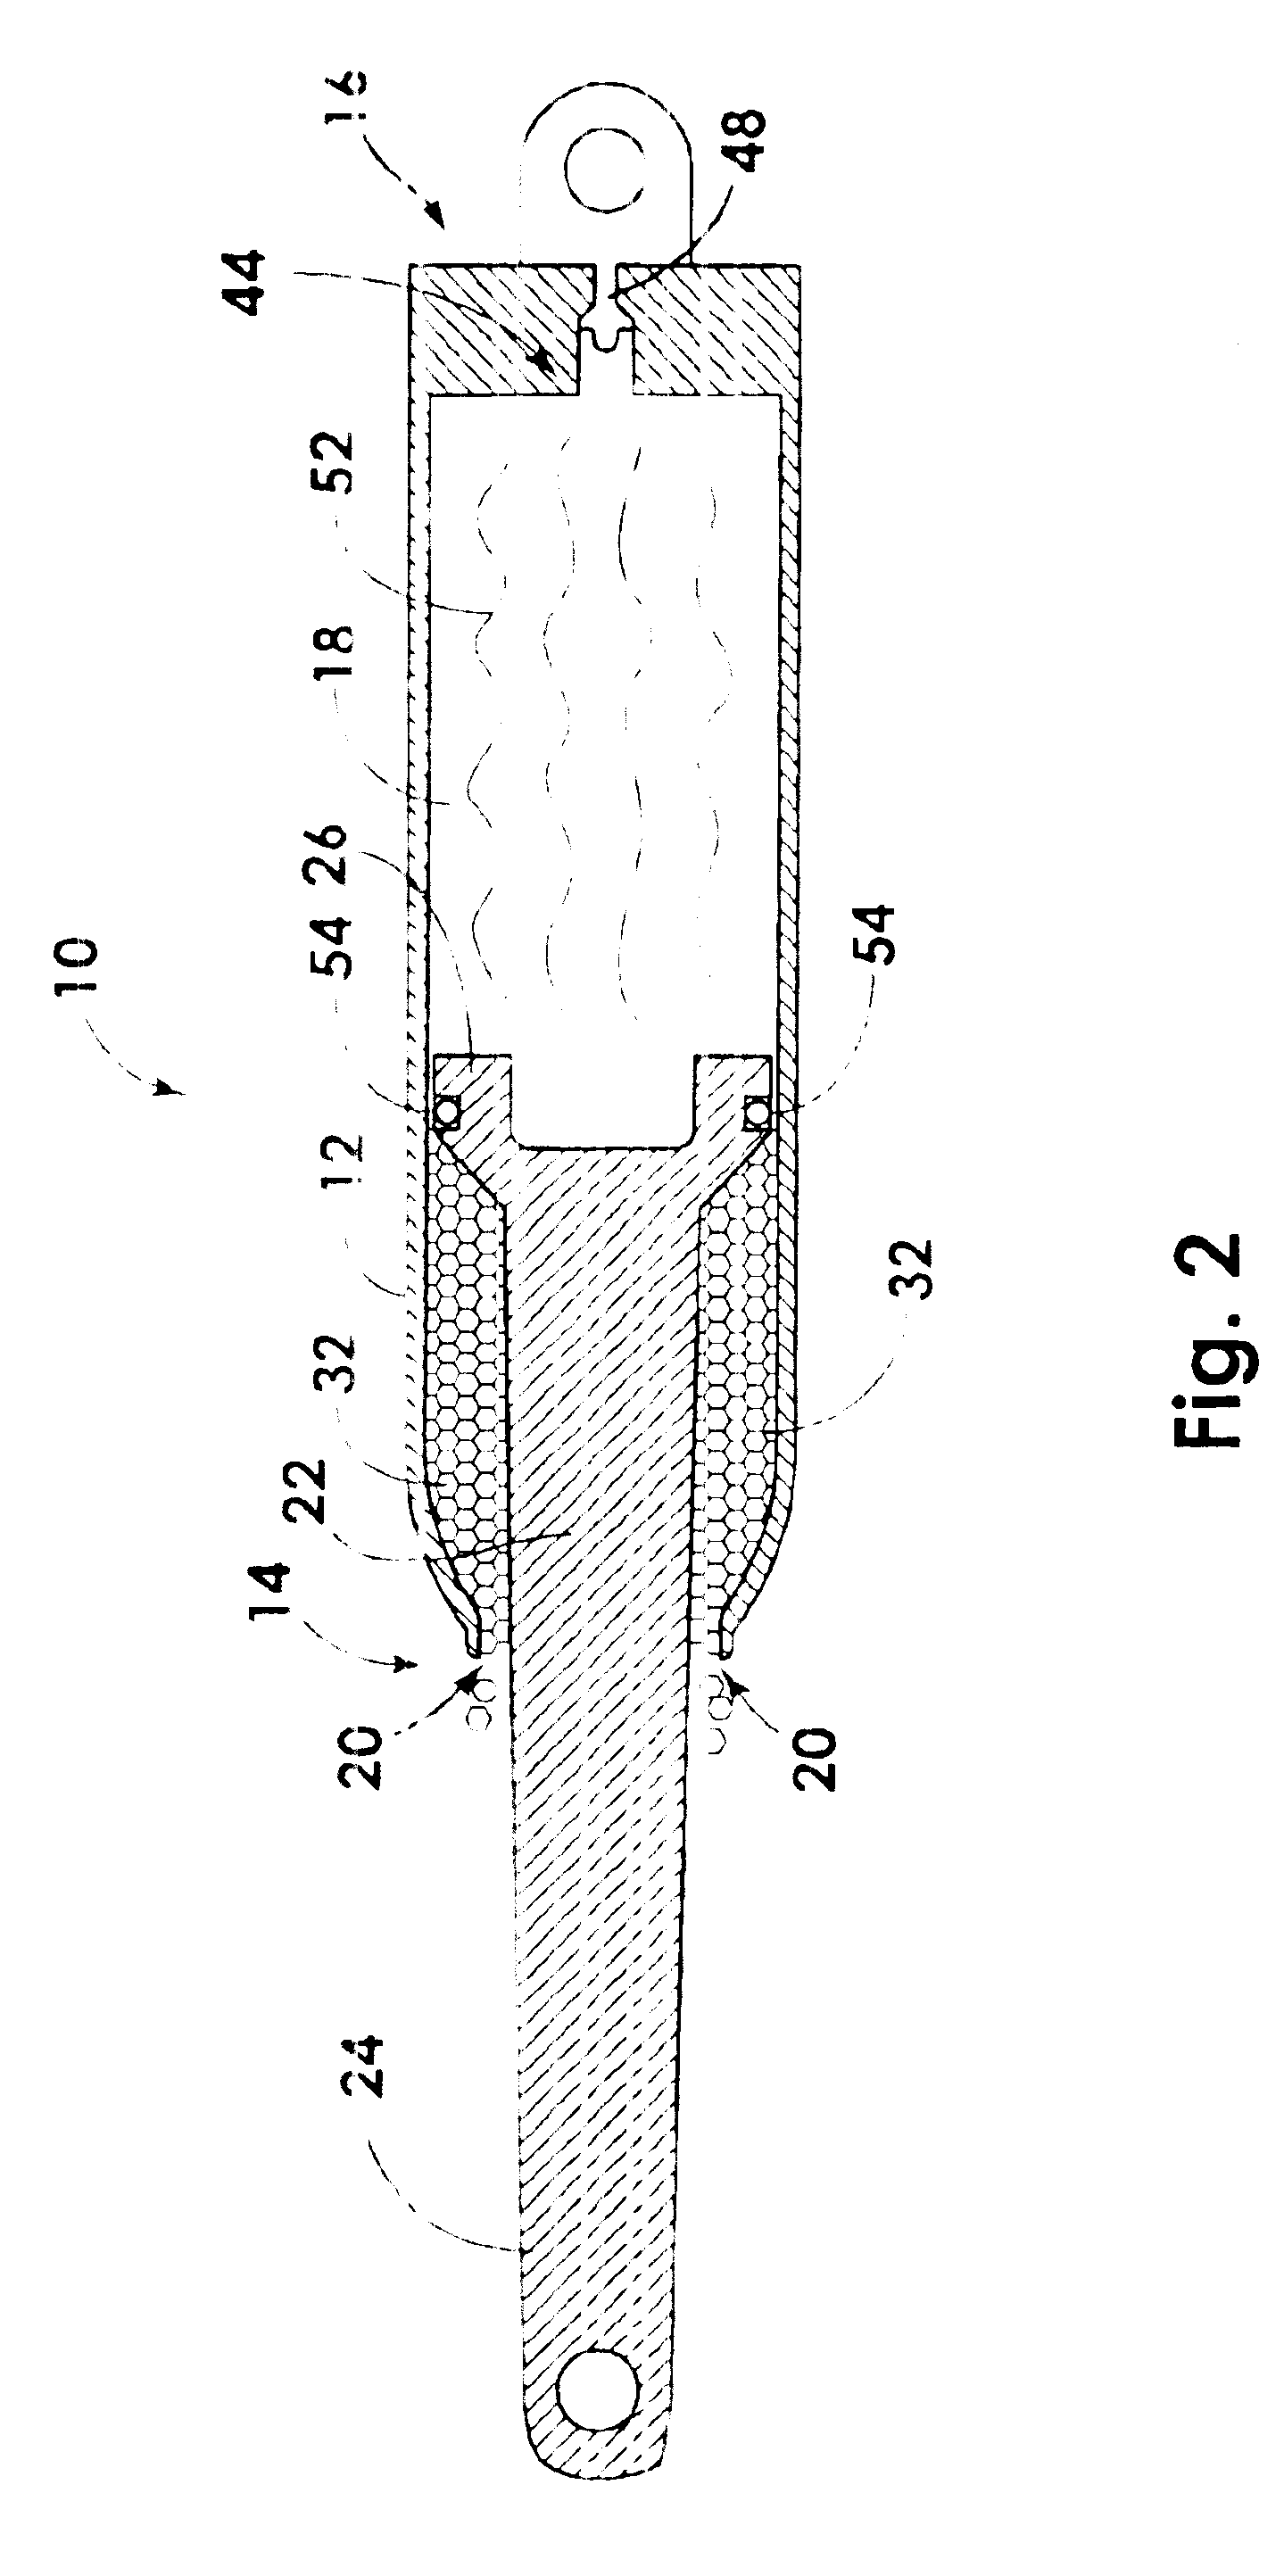 Linear actuator with an internal dampening mechanism